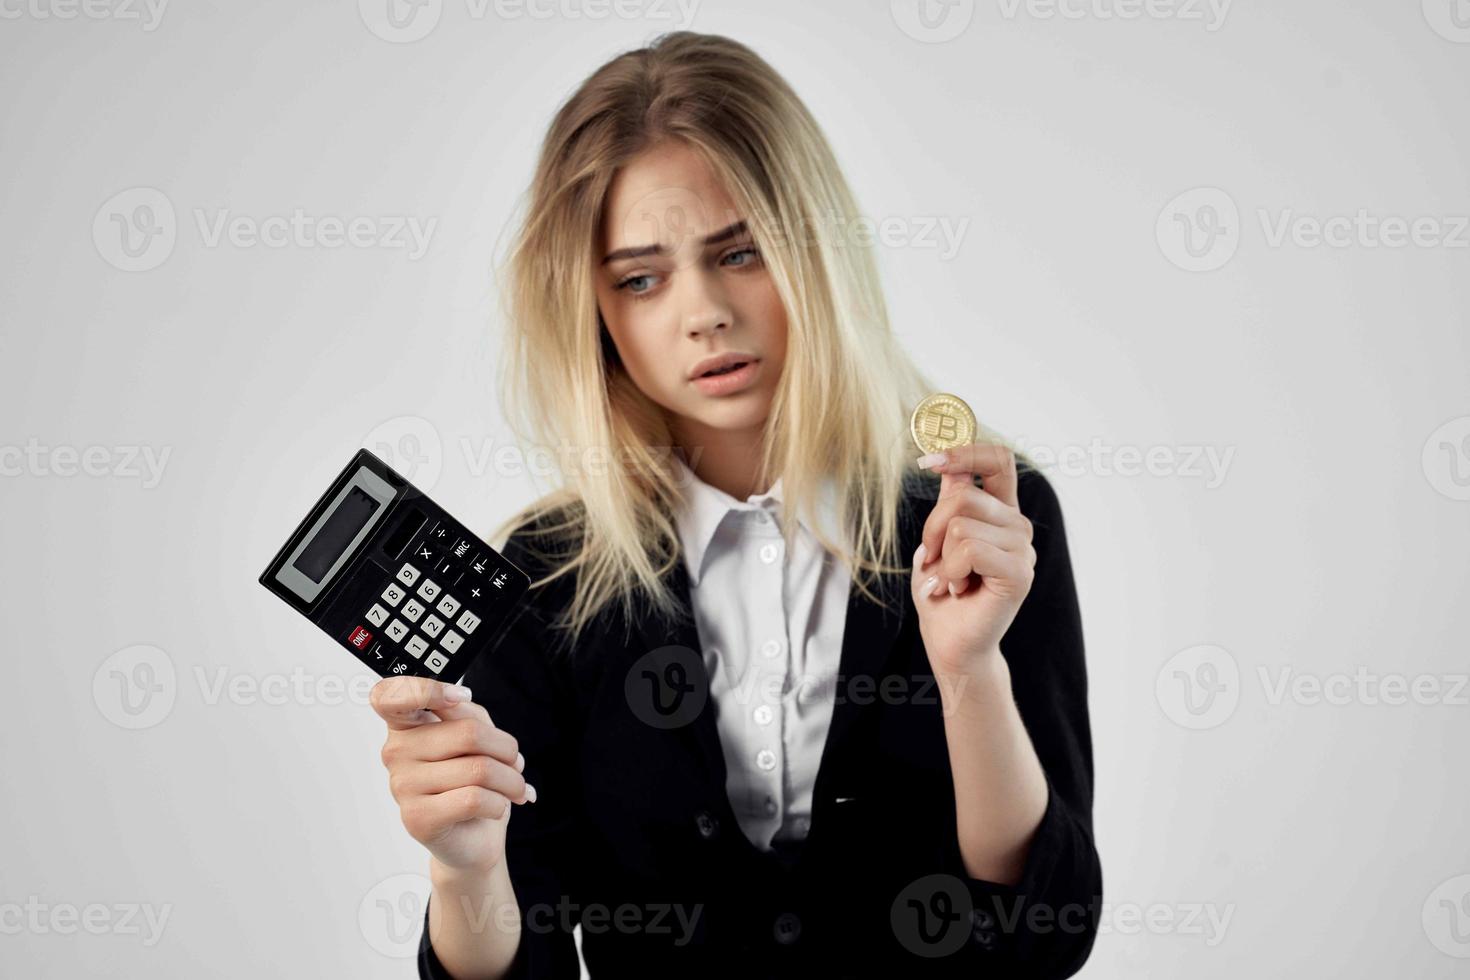 woman financier calculator cryptocurrency bitcoin internet technology photo